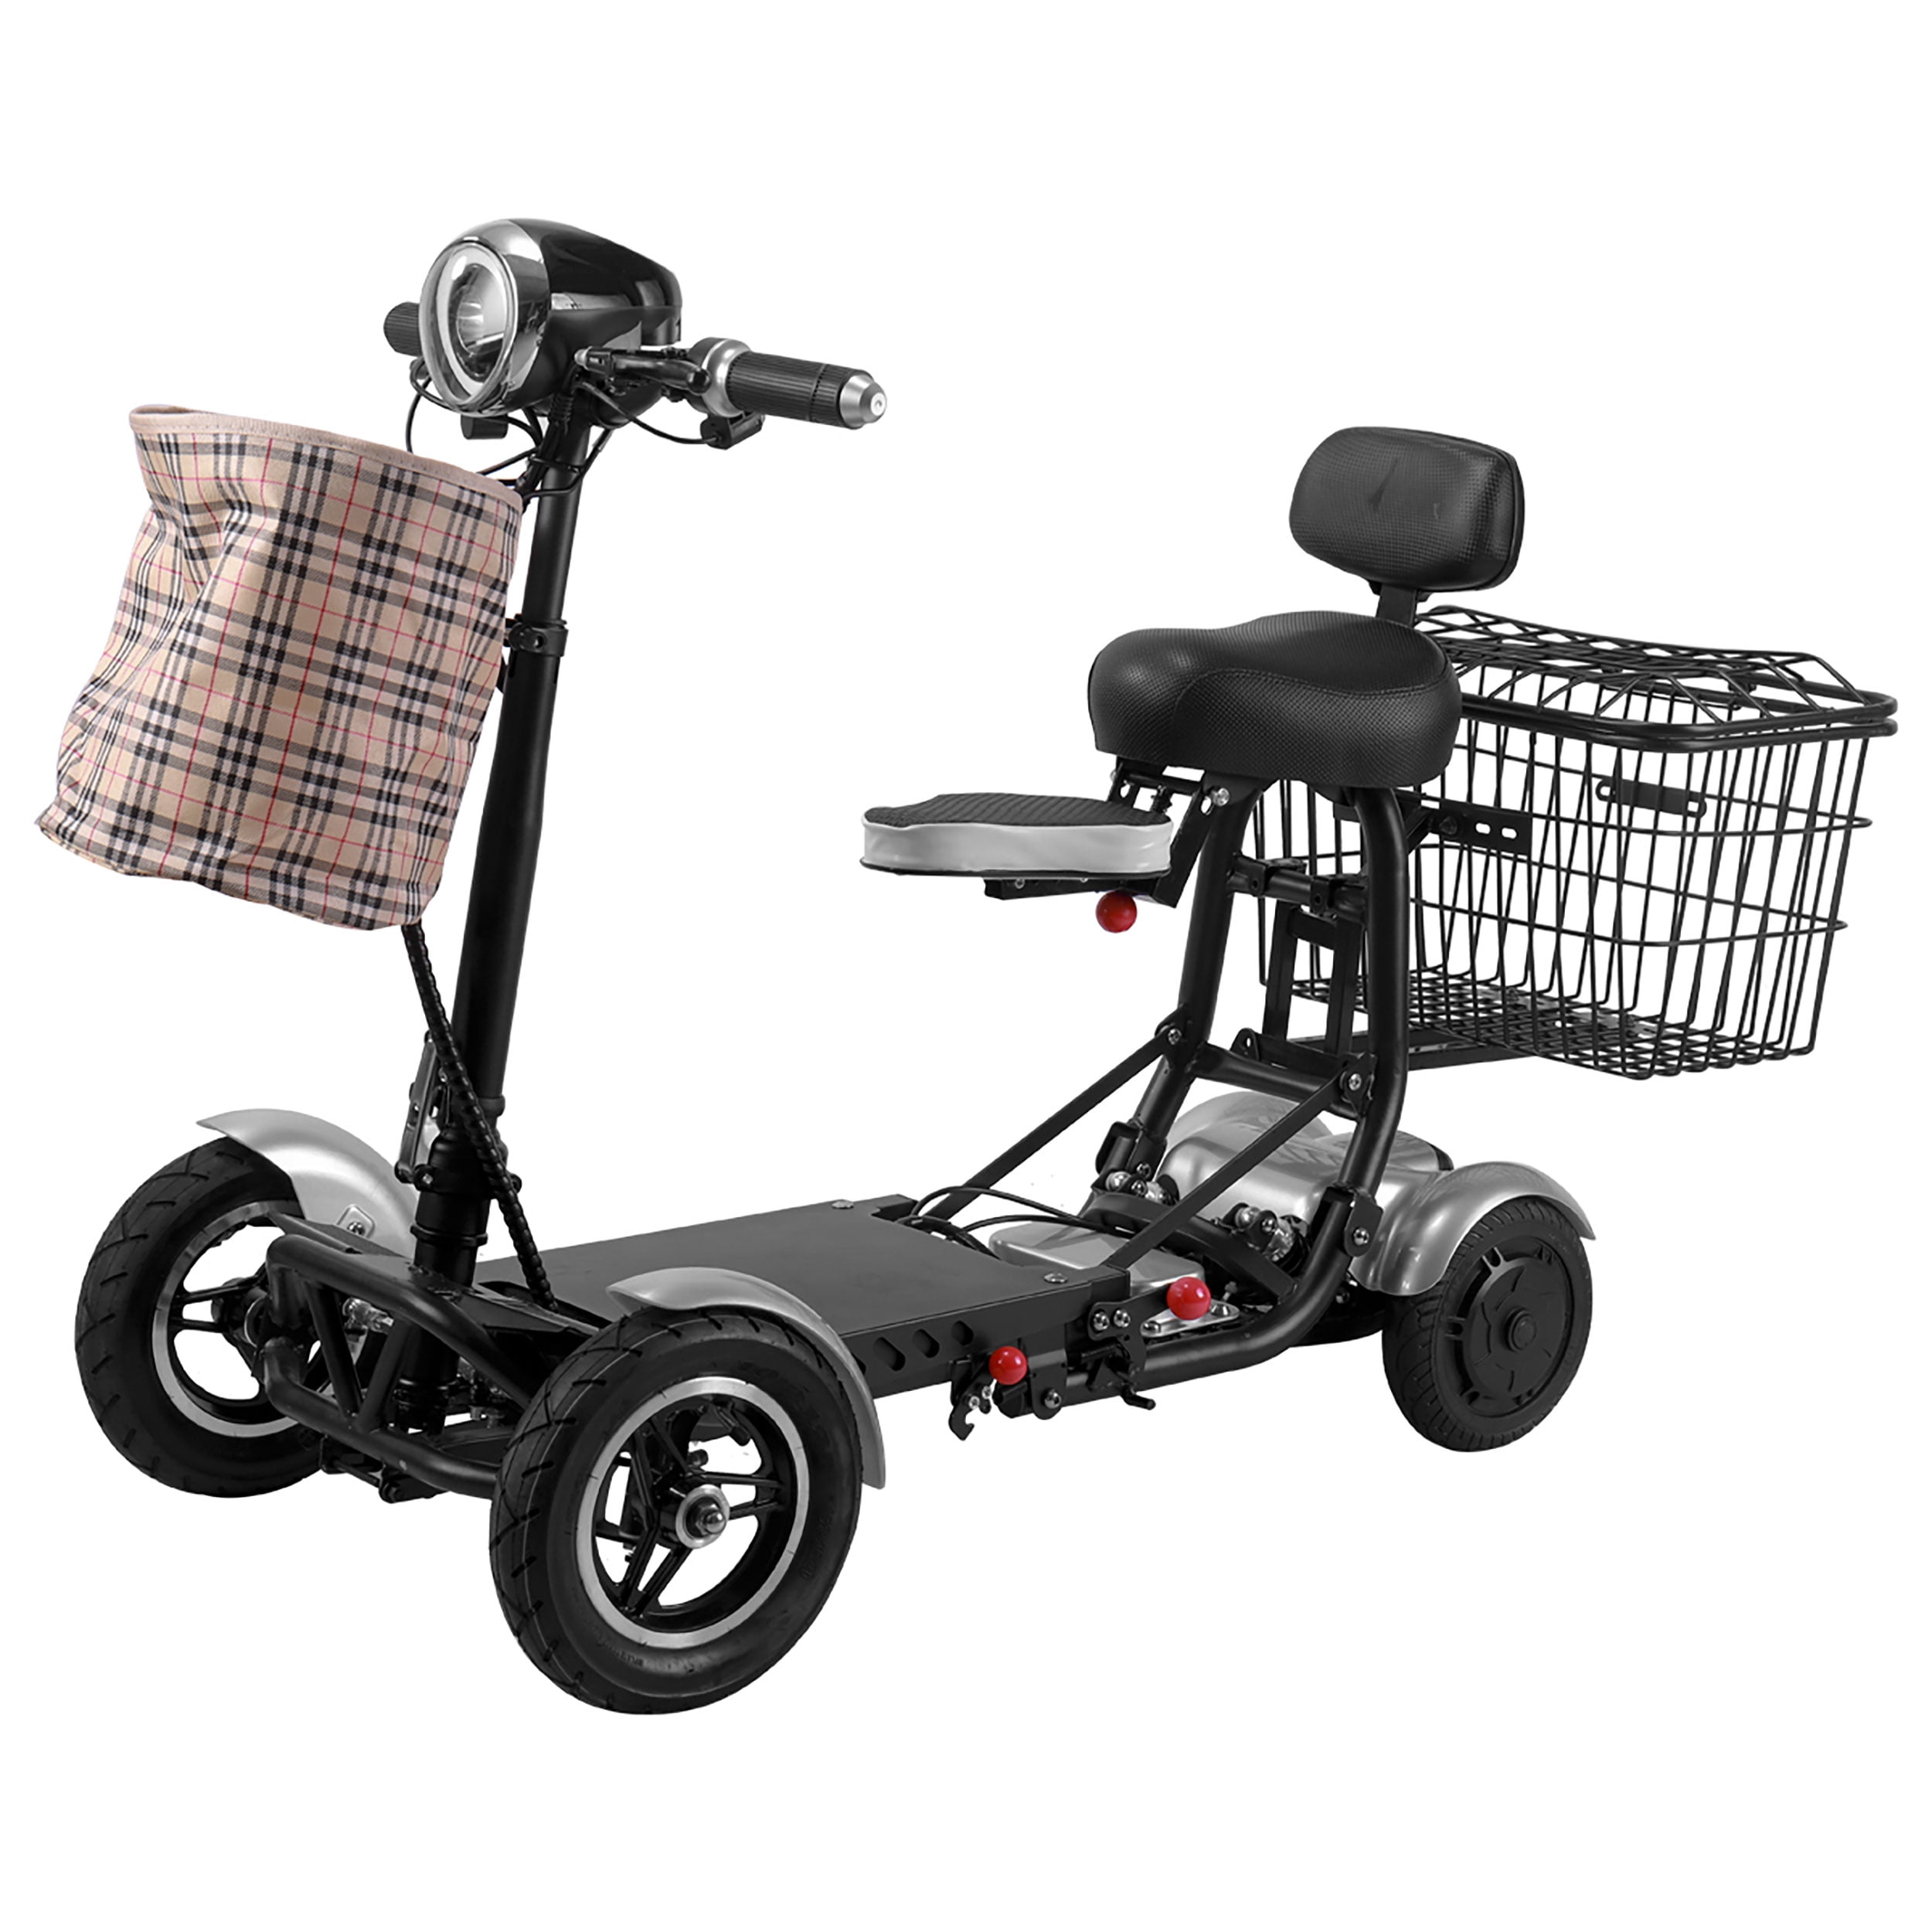 Bangeran Scooter eléctrico para adultos, viaje fácil